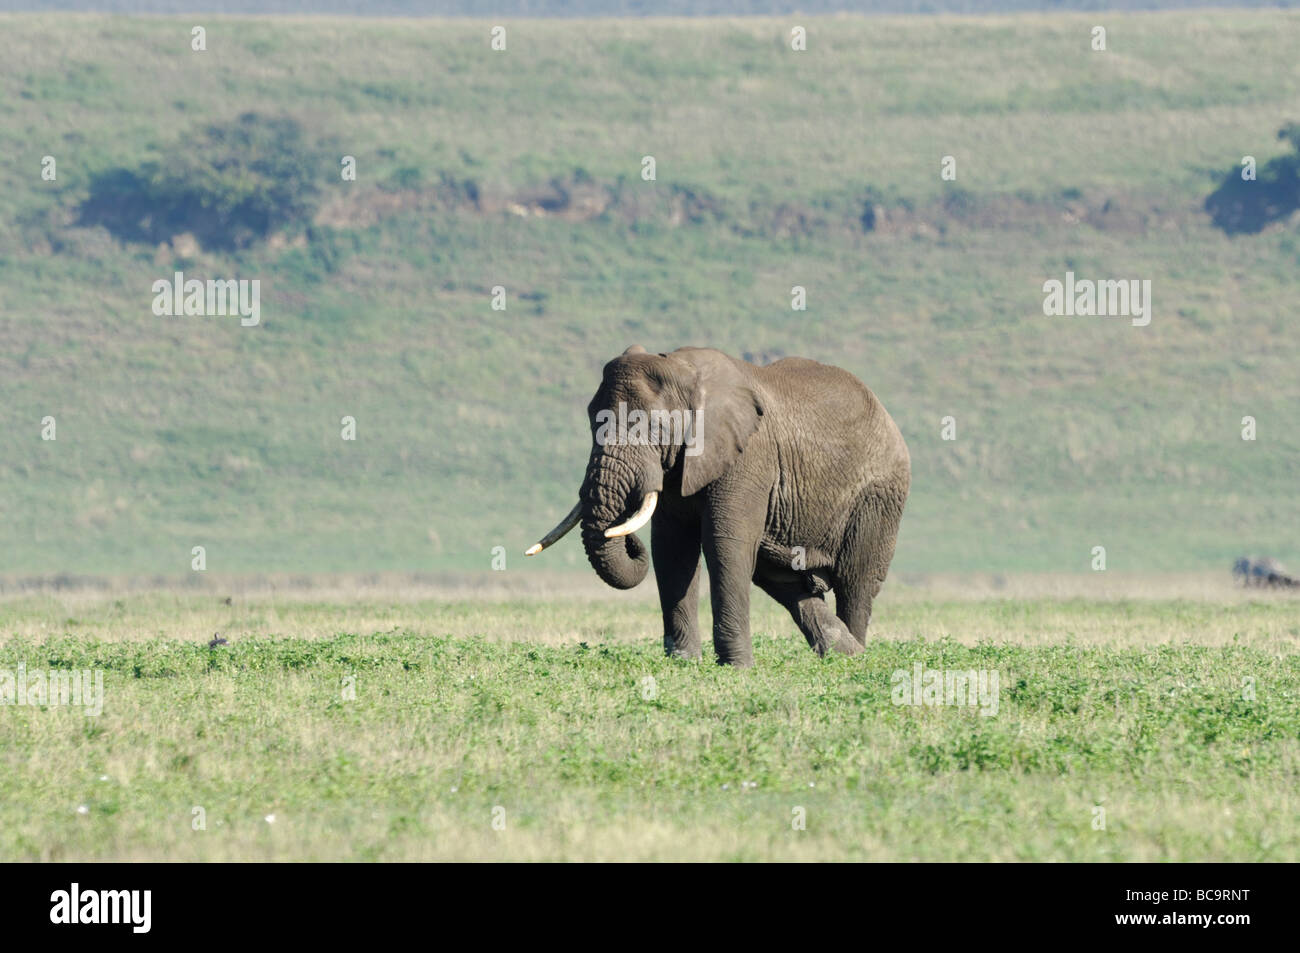 Stock Foto von einem einsamer Elefantenbulle auf dem Boden des Ngorongoro Crater, Tansania, Februar 2009. Stockfoto